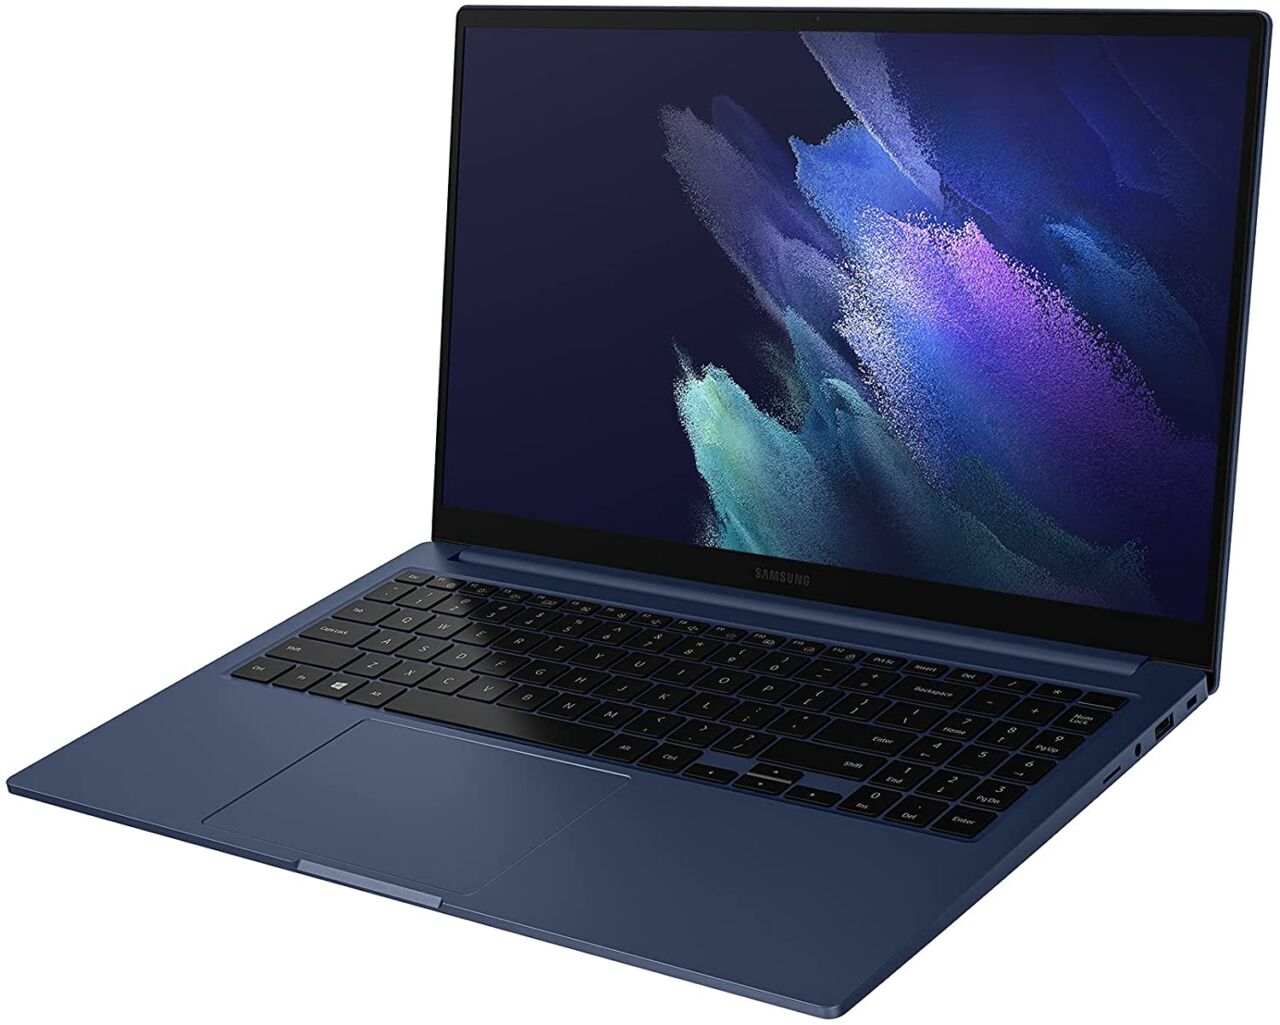 SAMSUNG Galaxy Book Pro 15.6-inch Laptop